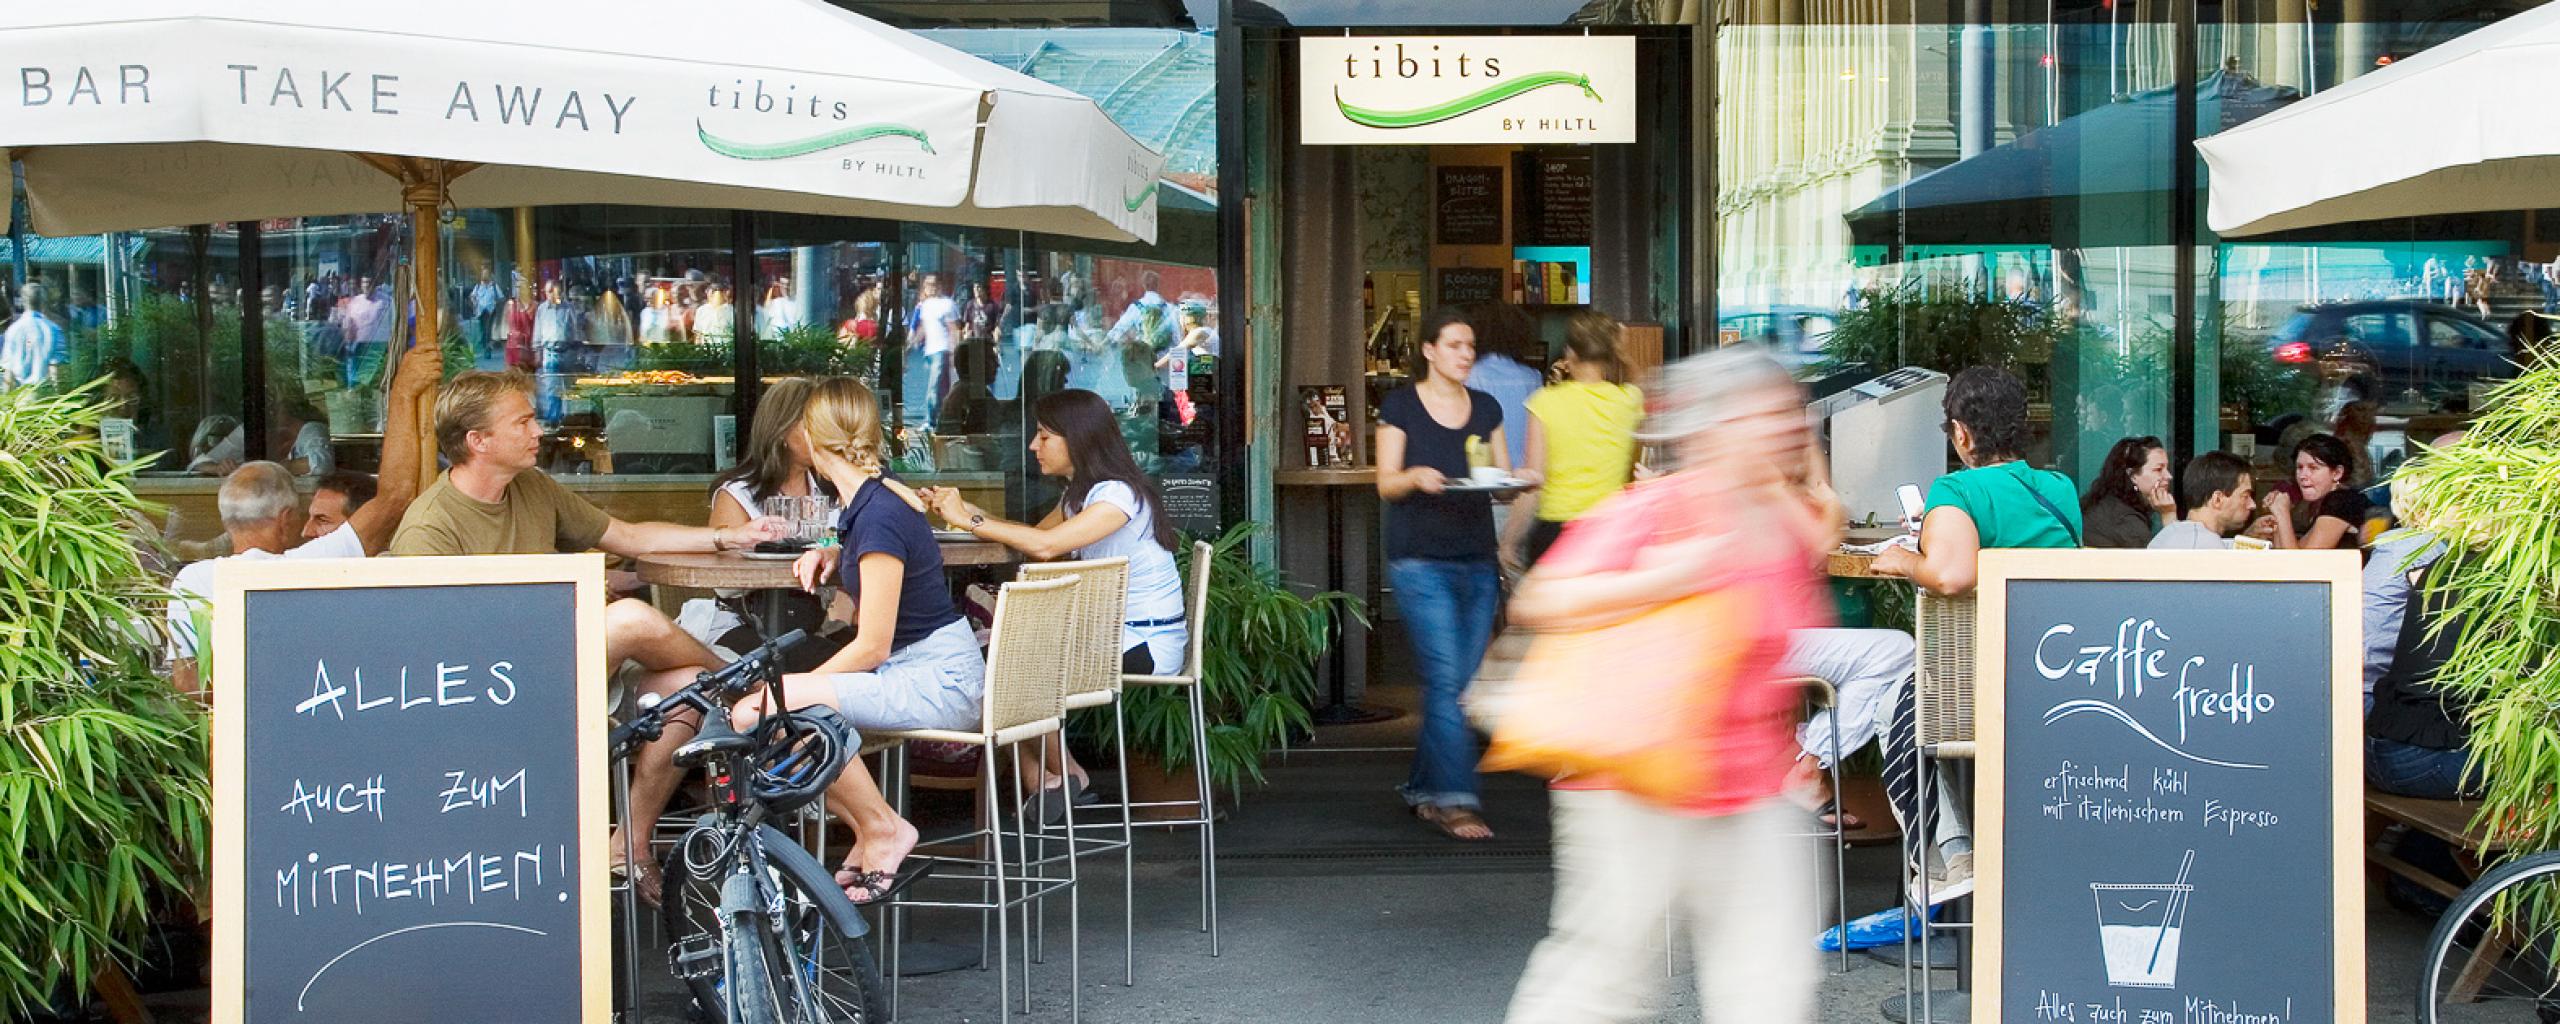 Tibits Restaurant & Bar